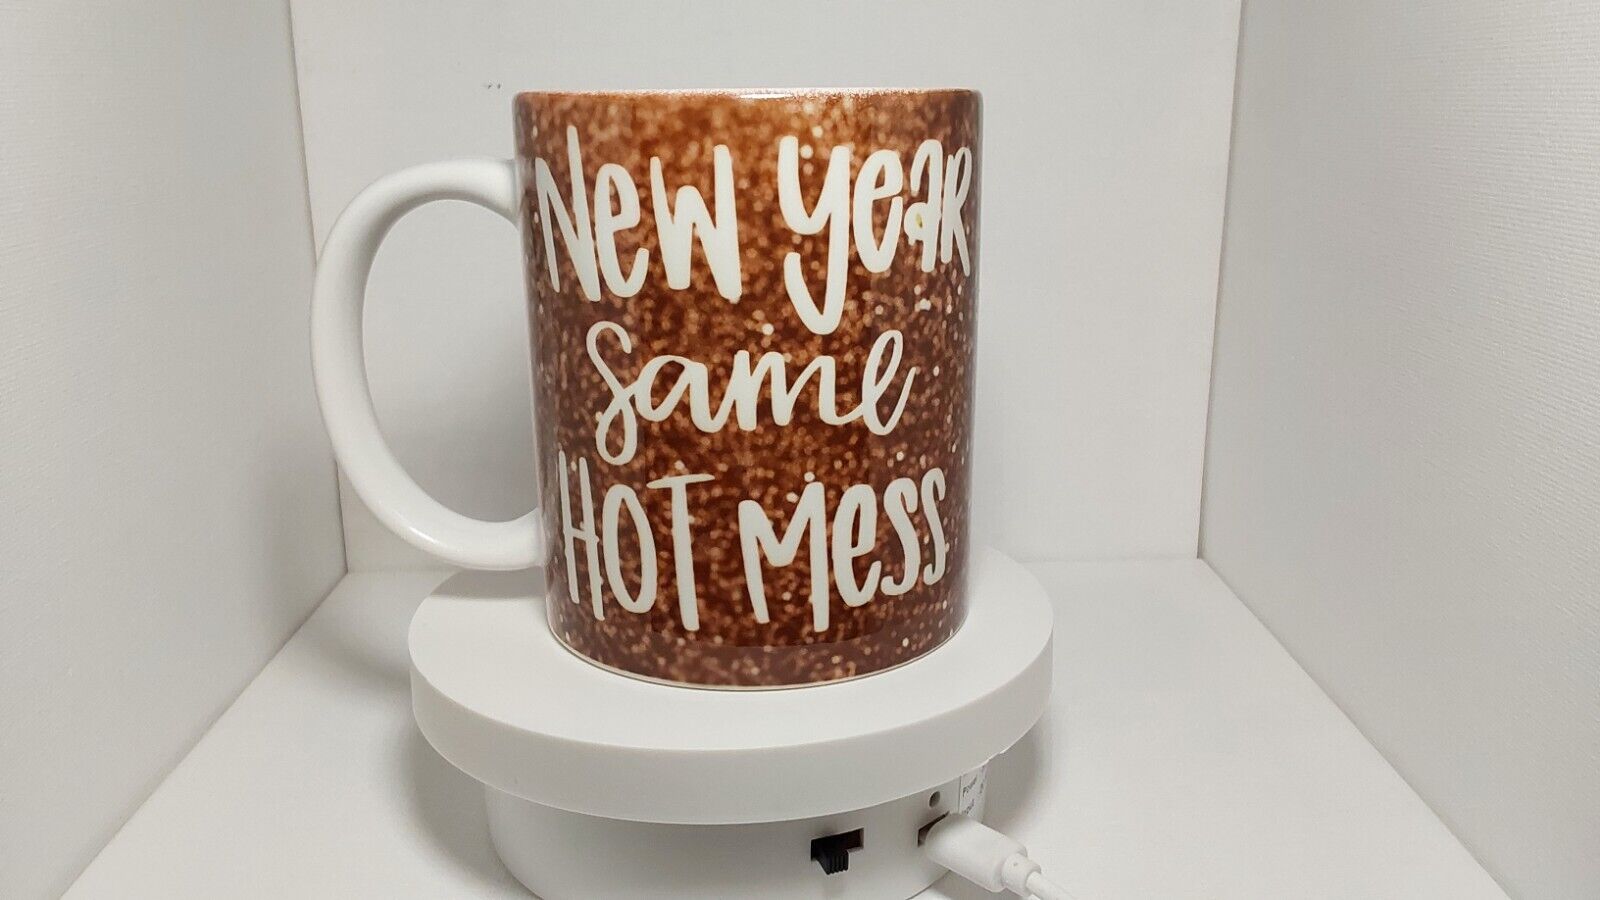 Handmade- New Years- Gift coffee mug - New Me Same Hot Mess - Dishwasher Safe